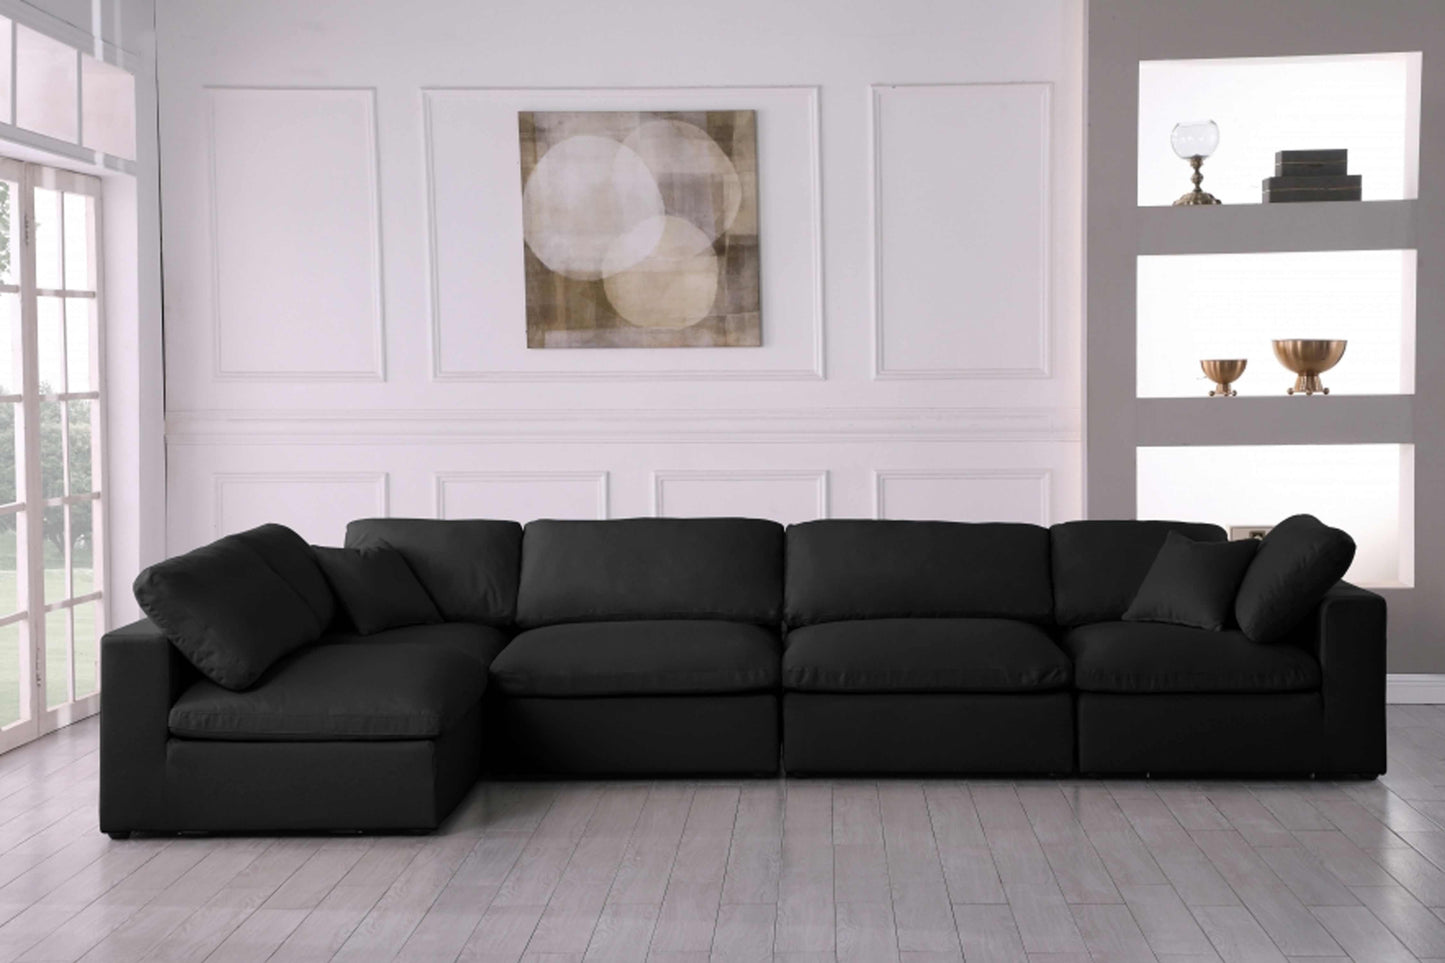 Serene Linen Deluxe Modular Down Filled Cloud-Like Comfort Overstuffed Sectional SKU: 601-Sec5D - Venini Furniture 